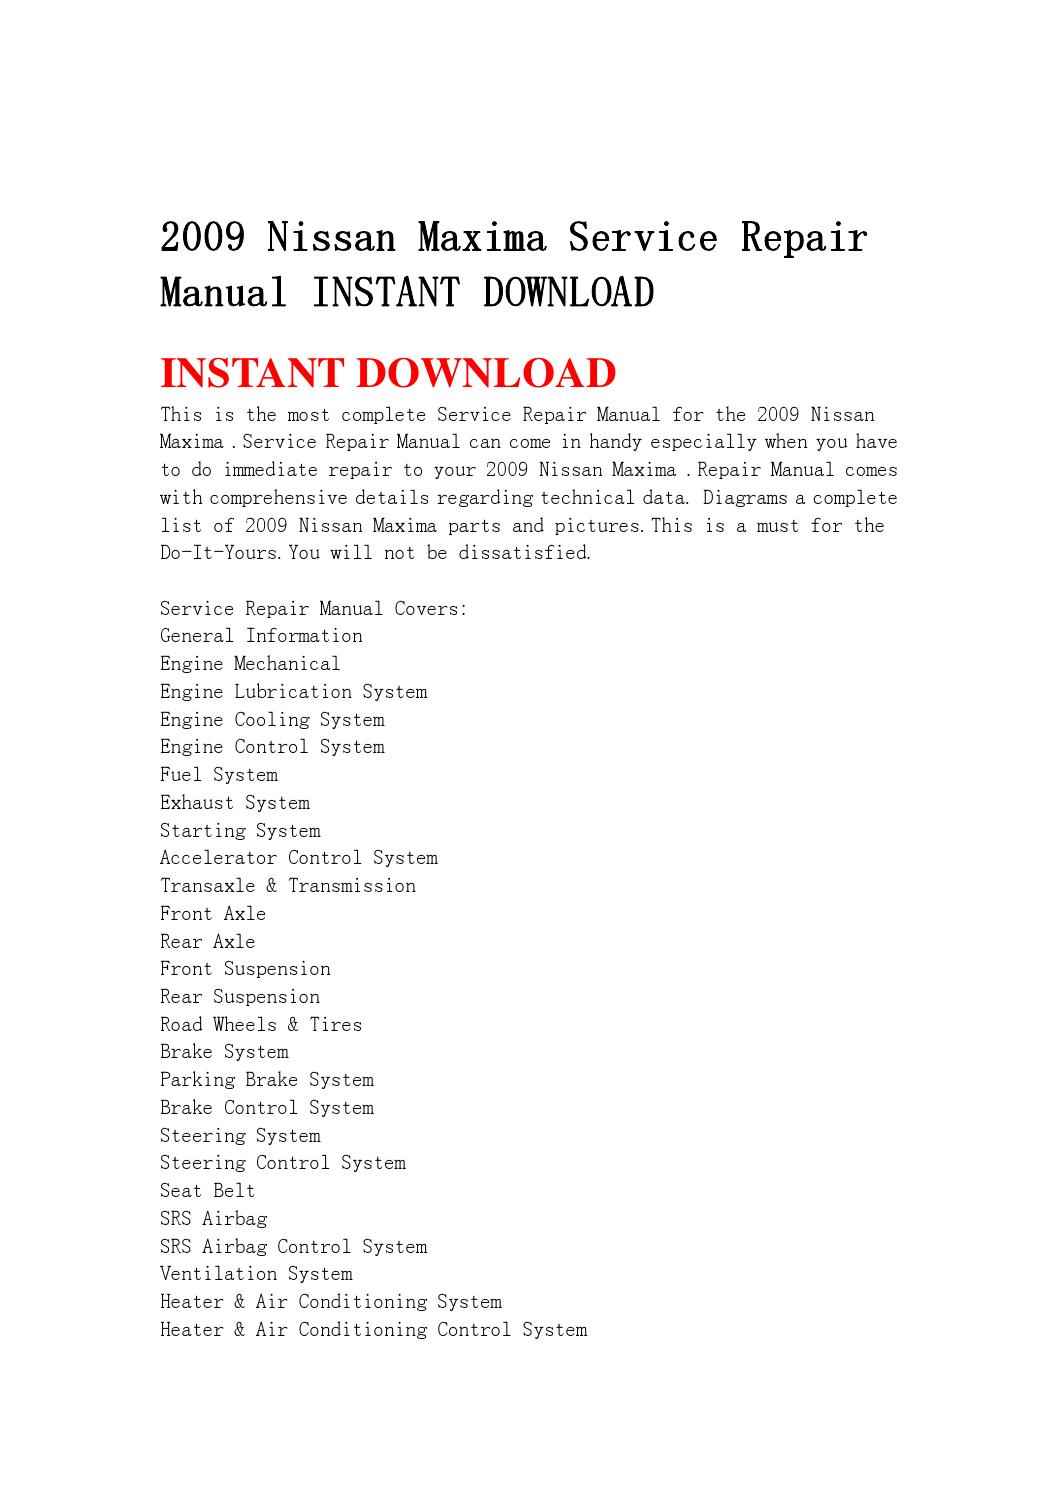 2009 Nissan Maxima Service Manual